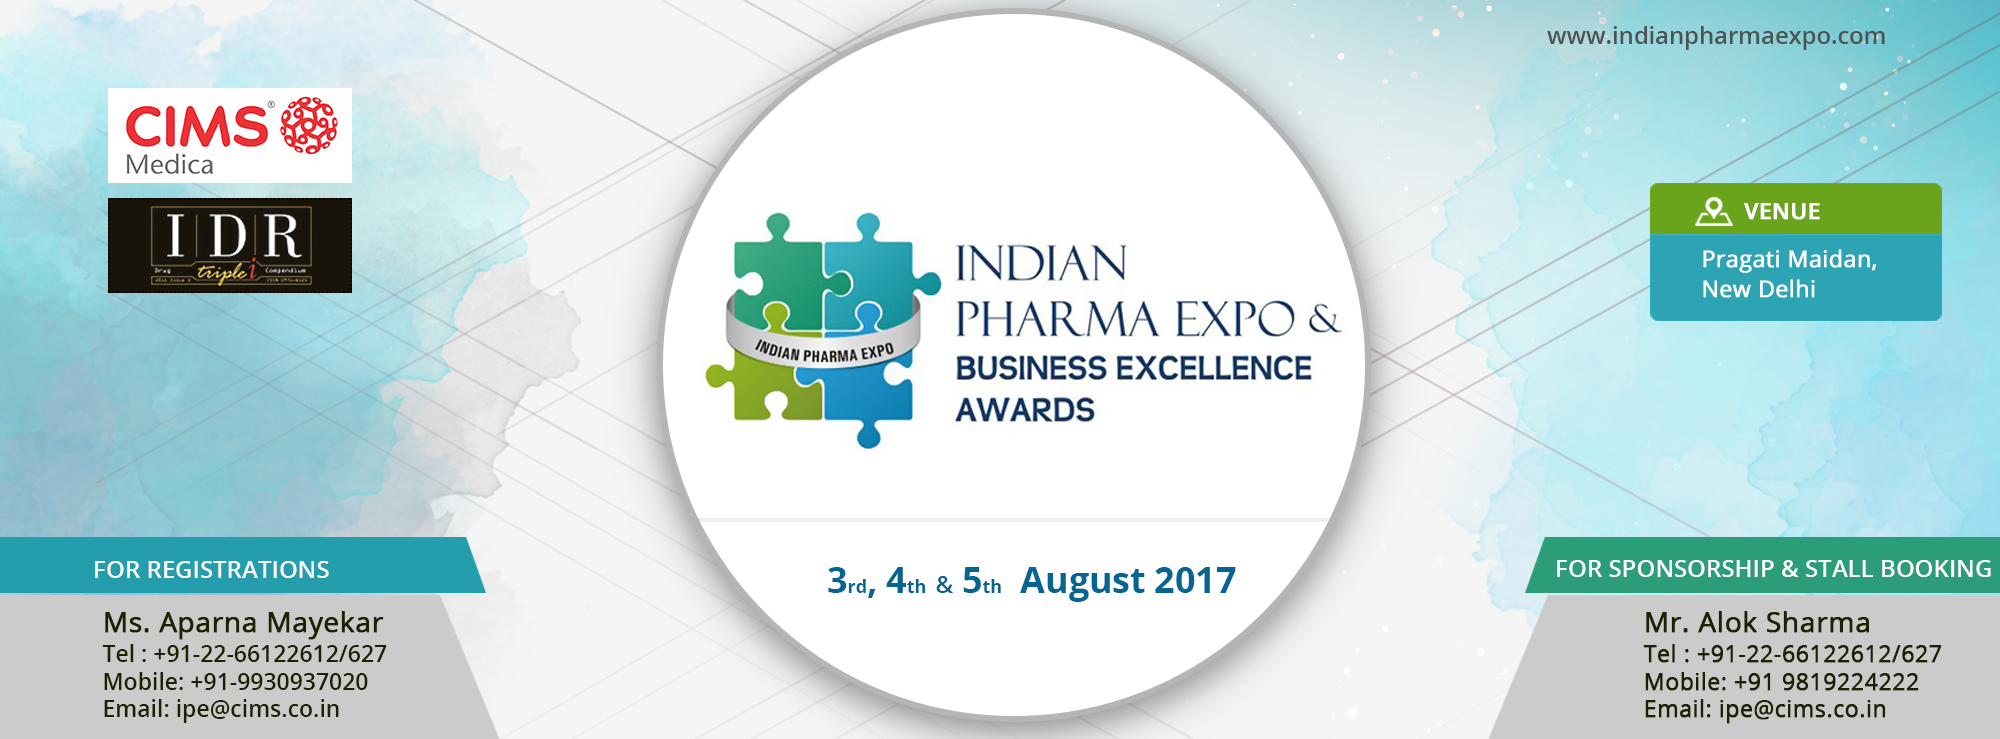 Indian Pharma Expo & Business Excellence Awards 2017, New Delhi, Delhi, India